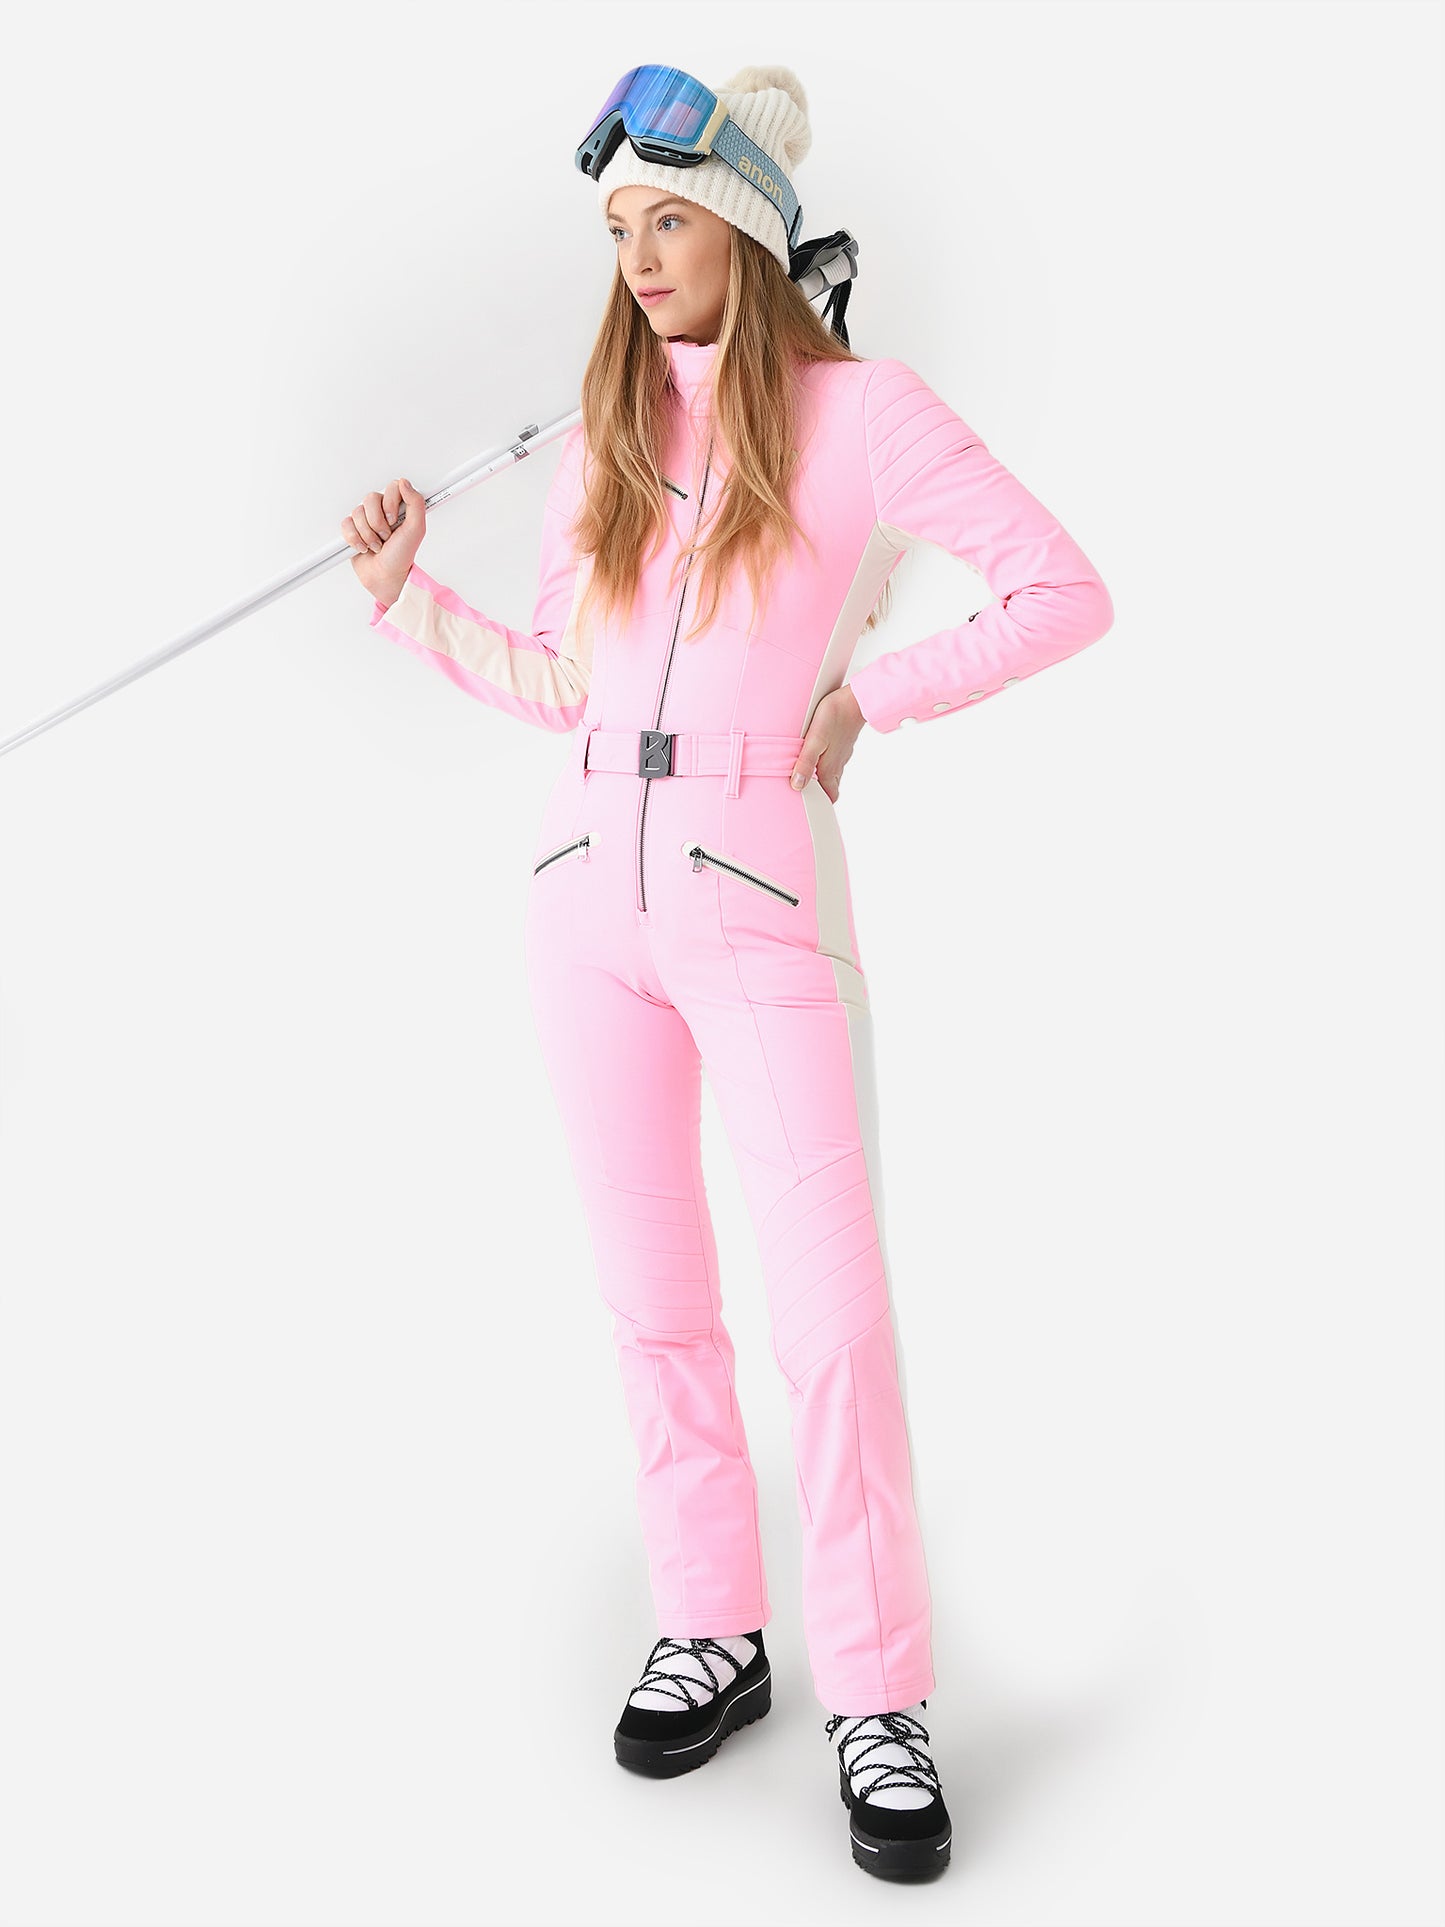 Bogner Women's Misha Ski Suit